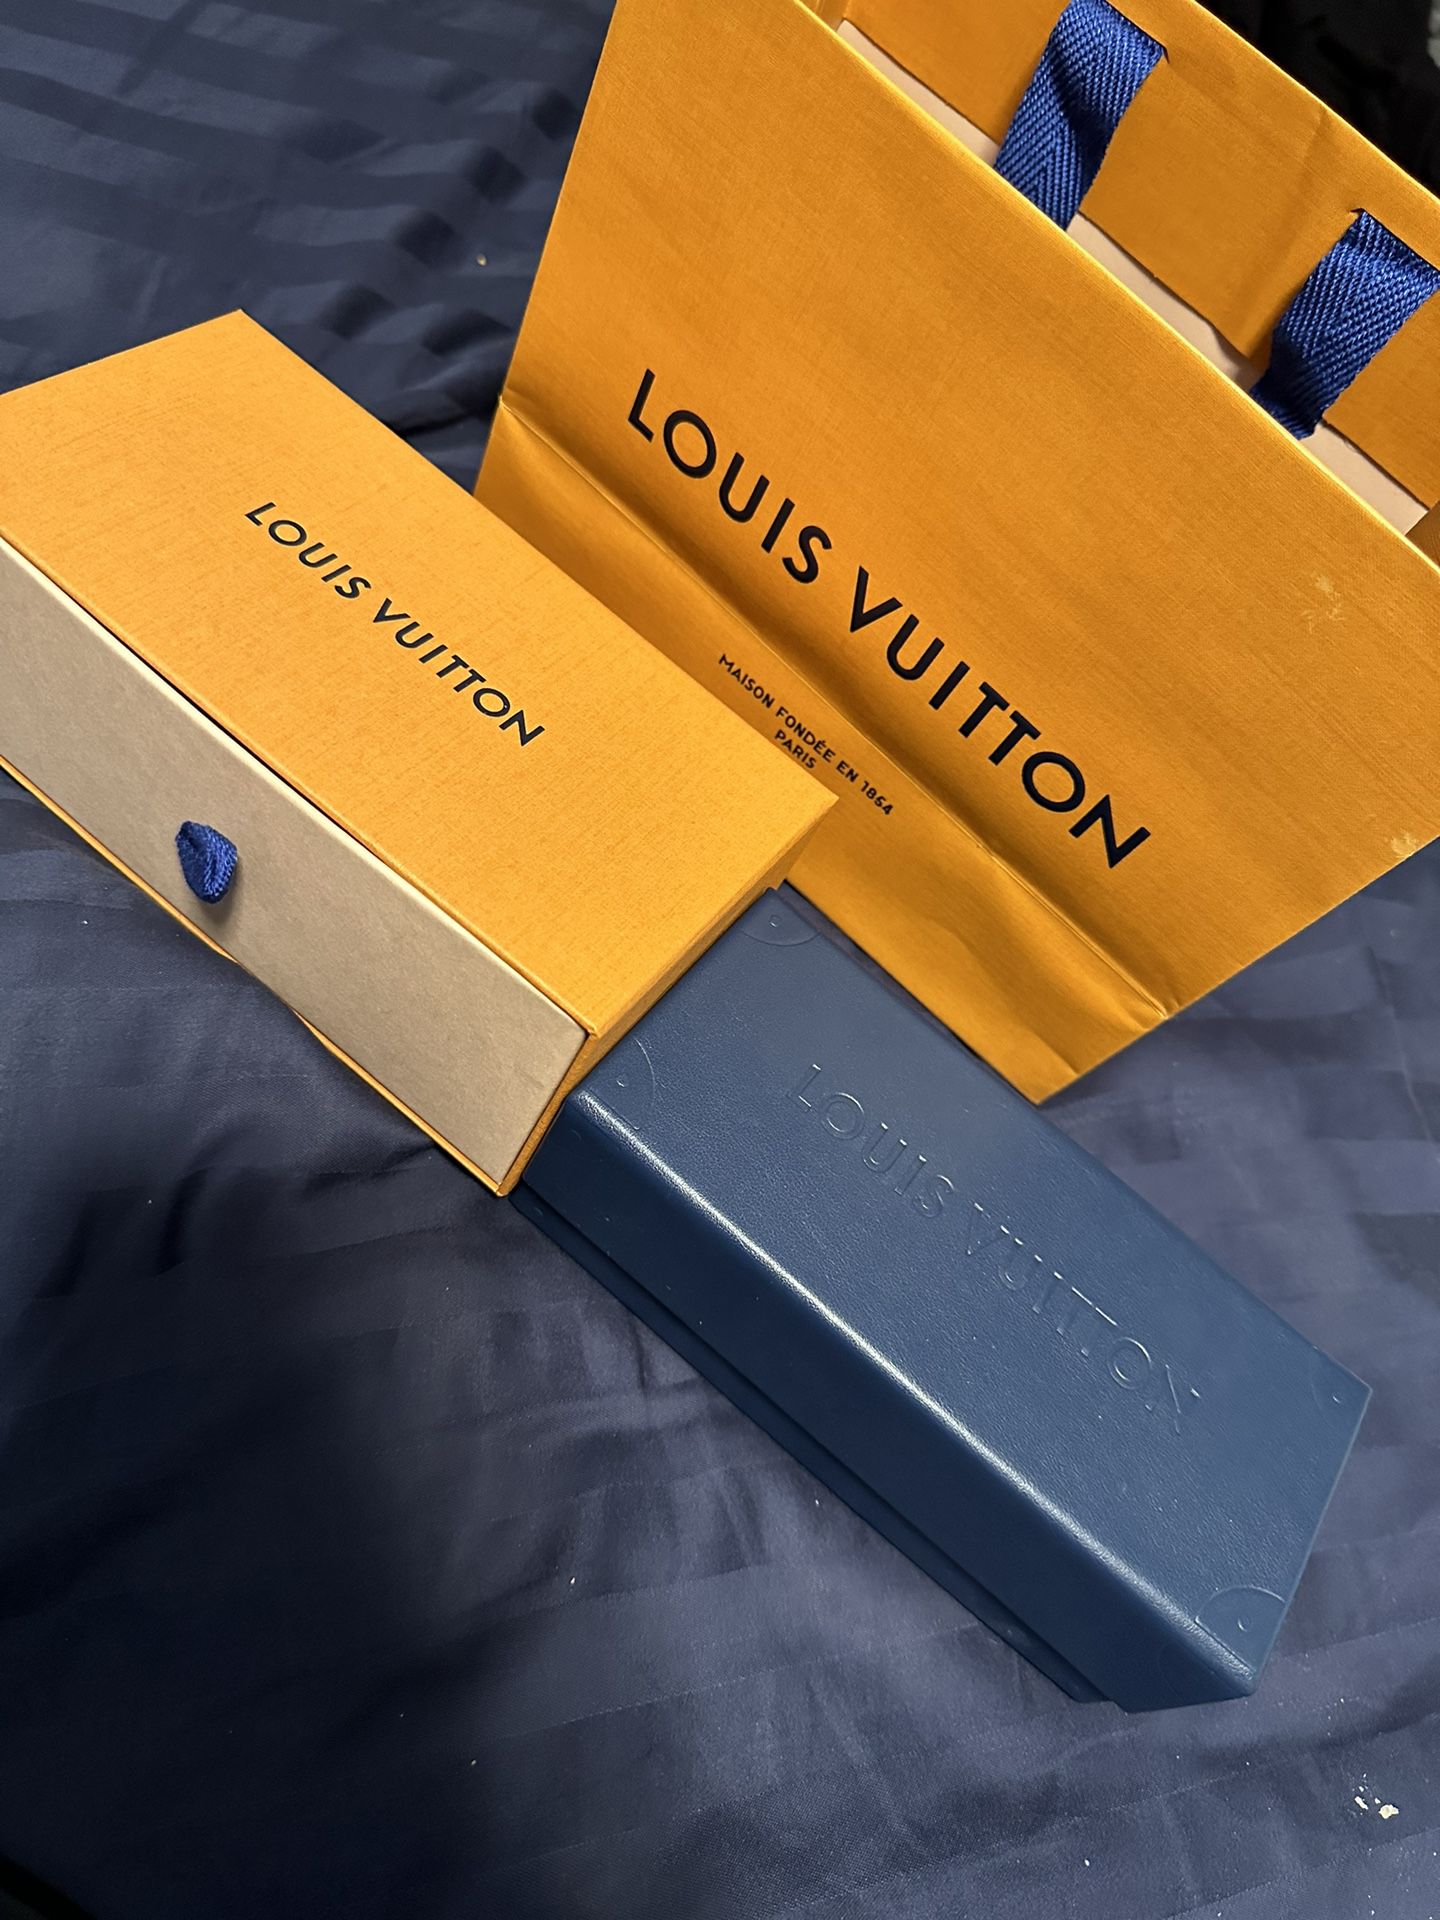 Louis Vuitton Waimea L Sunglasses for Sale in Orange, CA - OfferUp